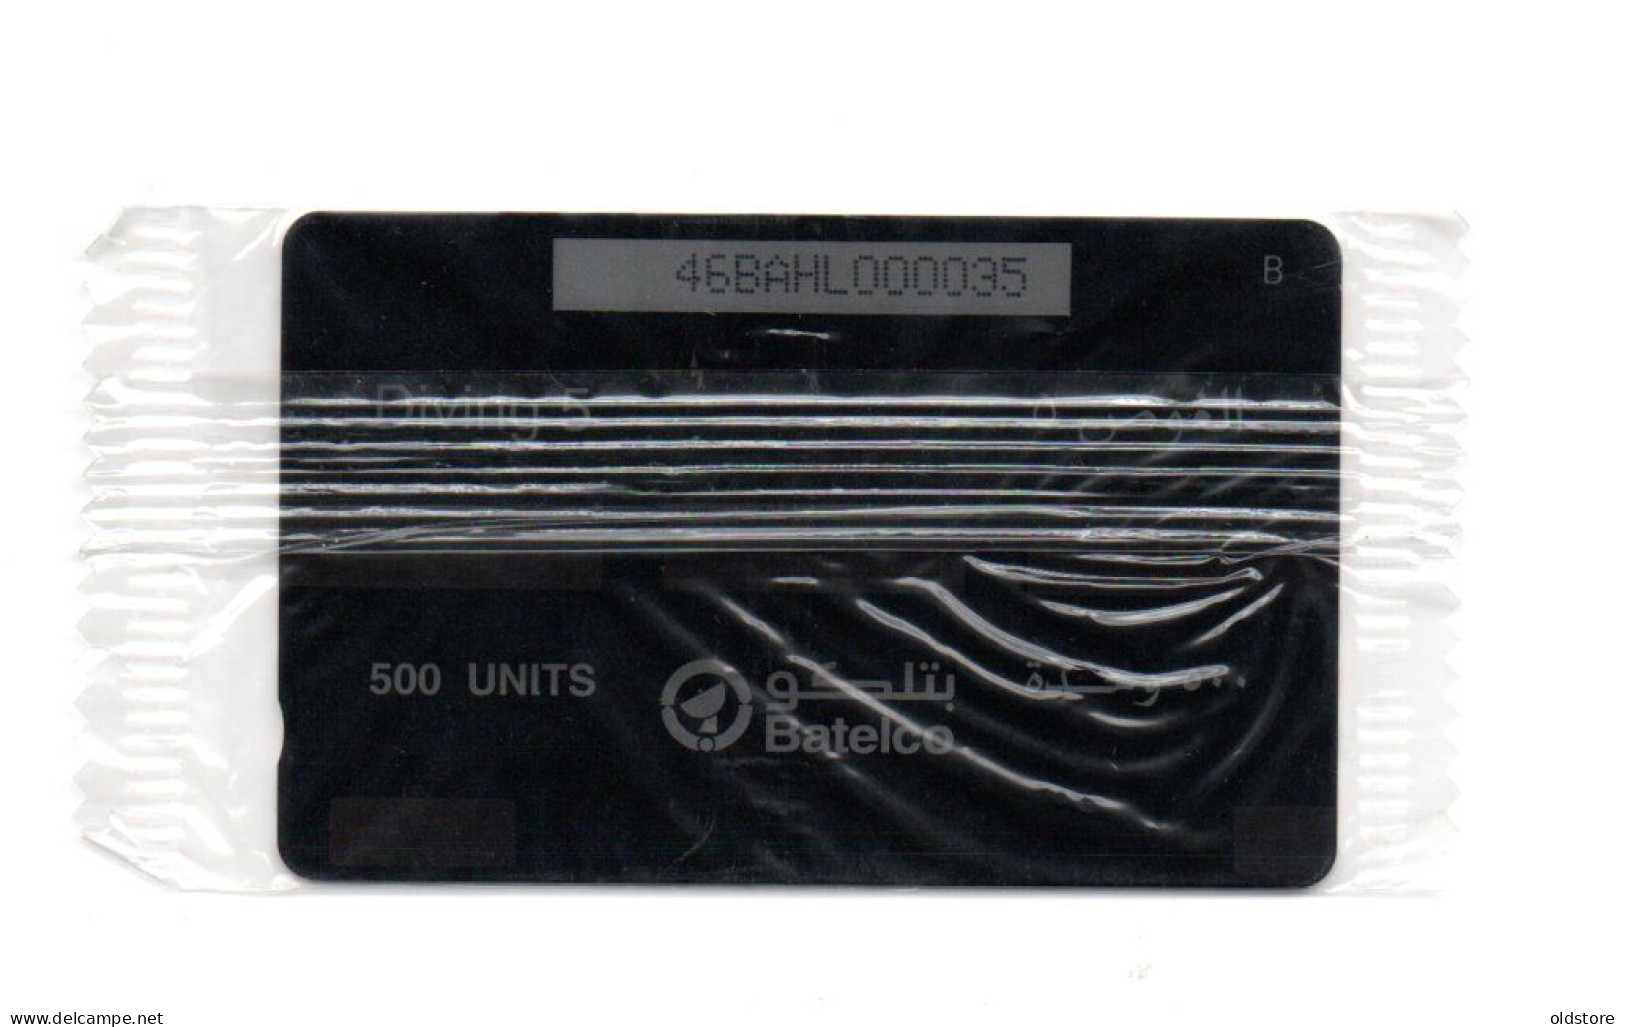 Bahrain Phonecards - (diving 5) - Mint Card - Low Serial Number (000035 ) - 500Units - ND 1999 - Batelco - Baharain